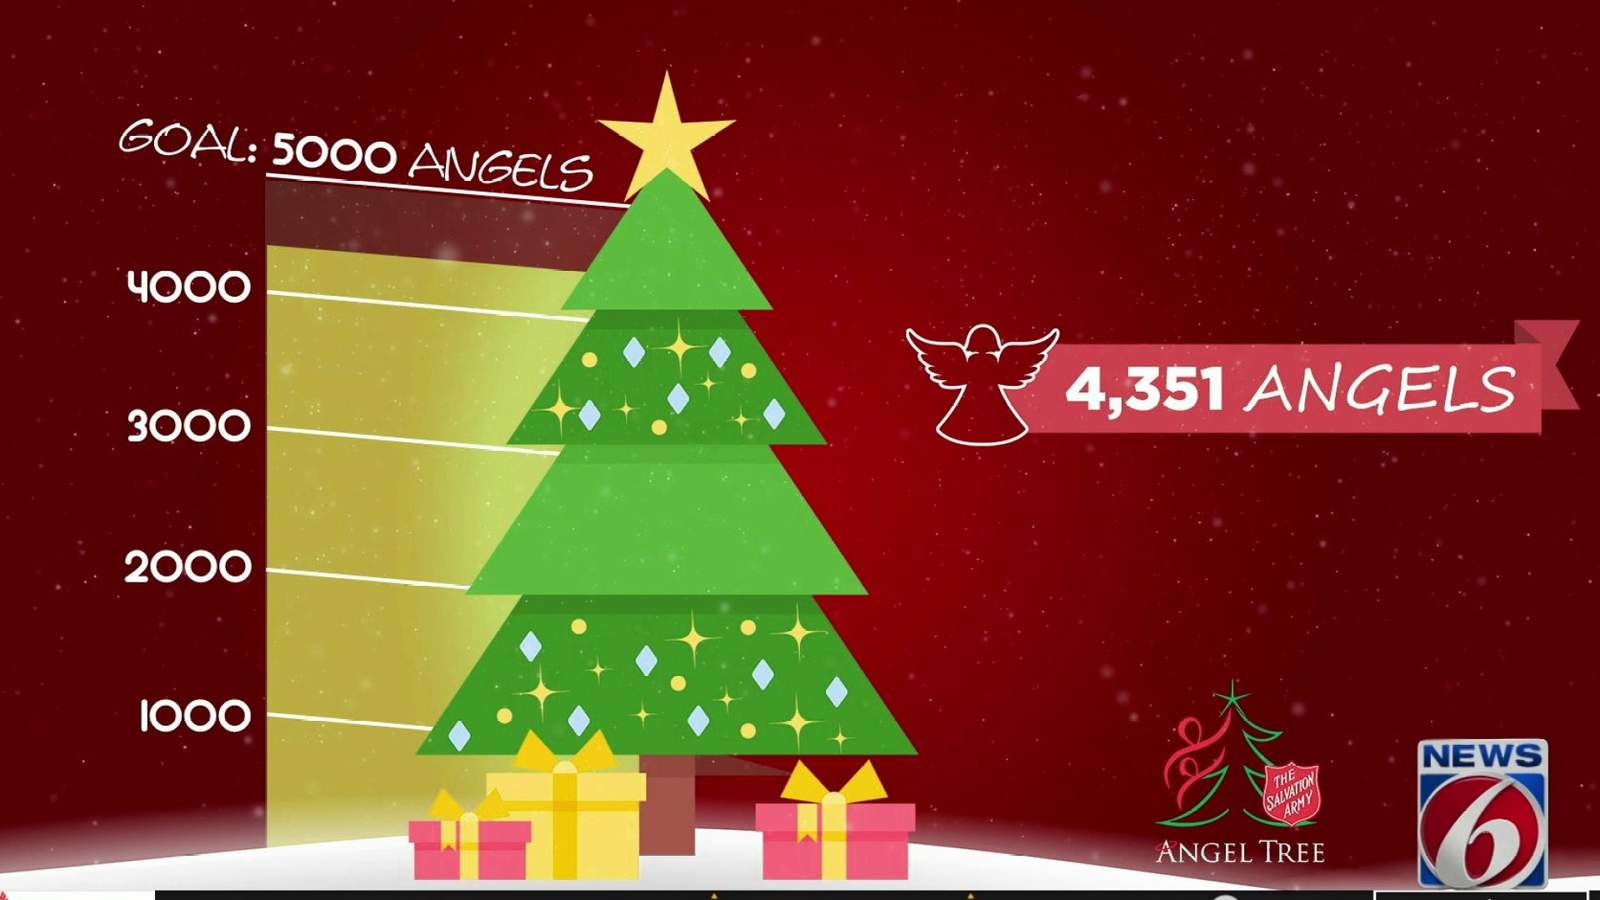 Angel Tree program expands after News 6 viewers help raise $211,478